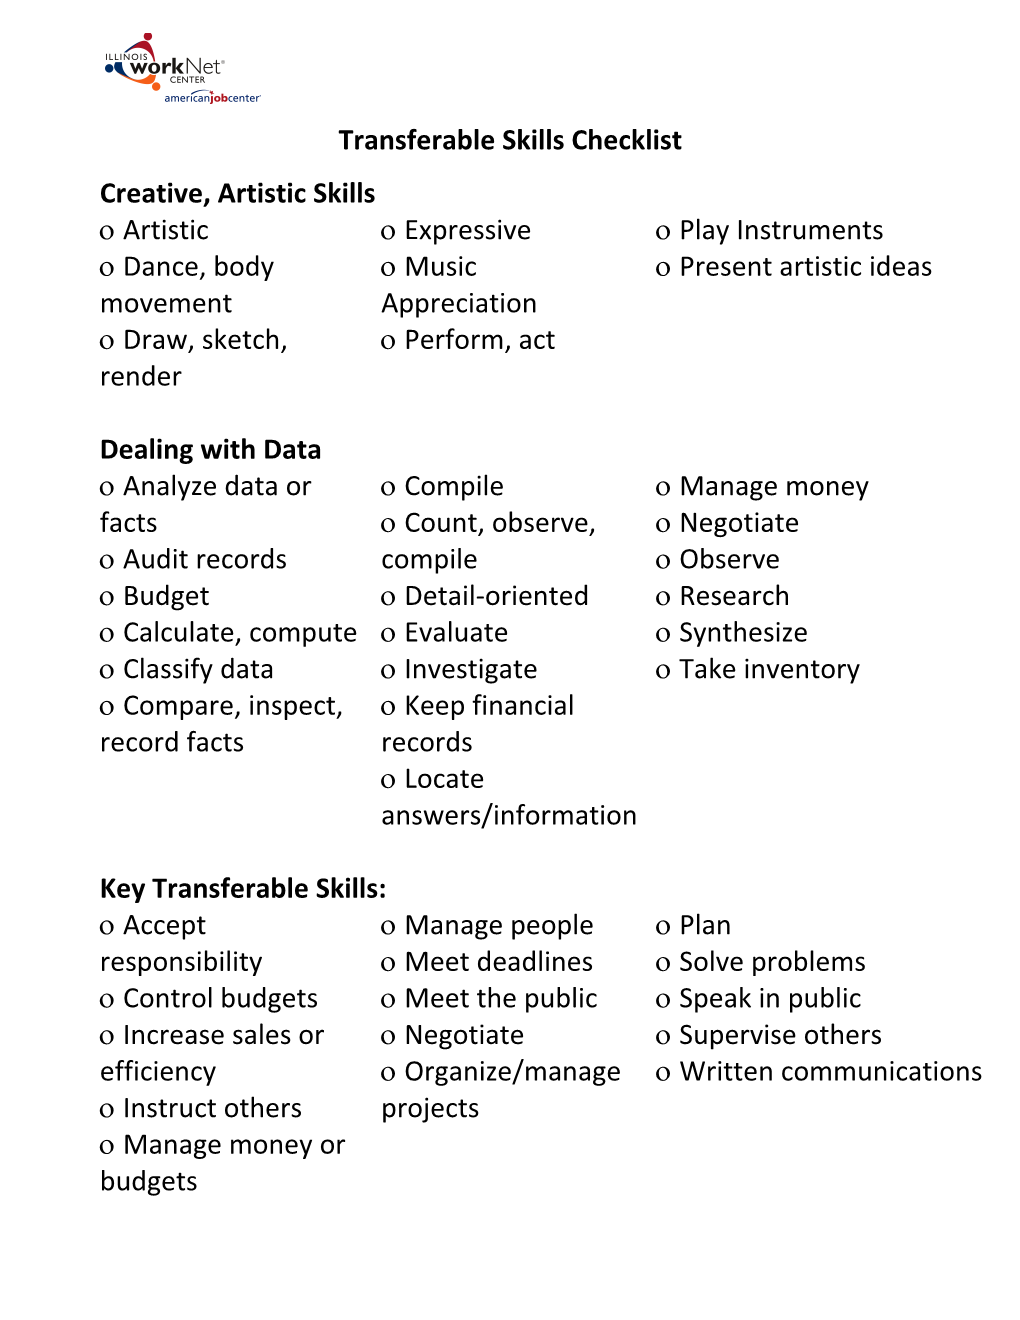 Transferable Skills Checklist - Large Print